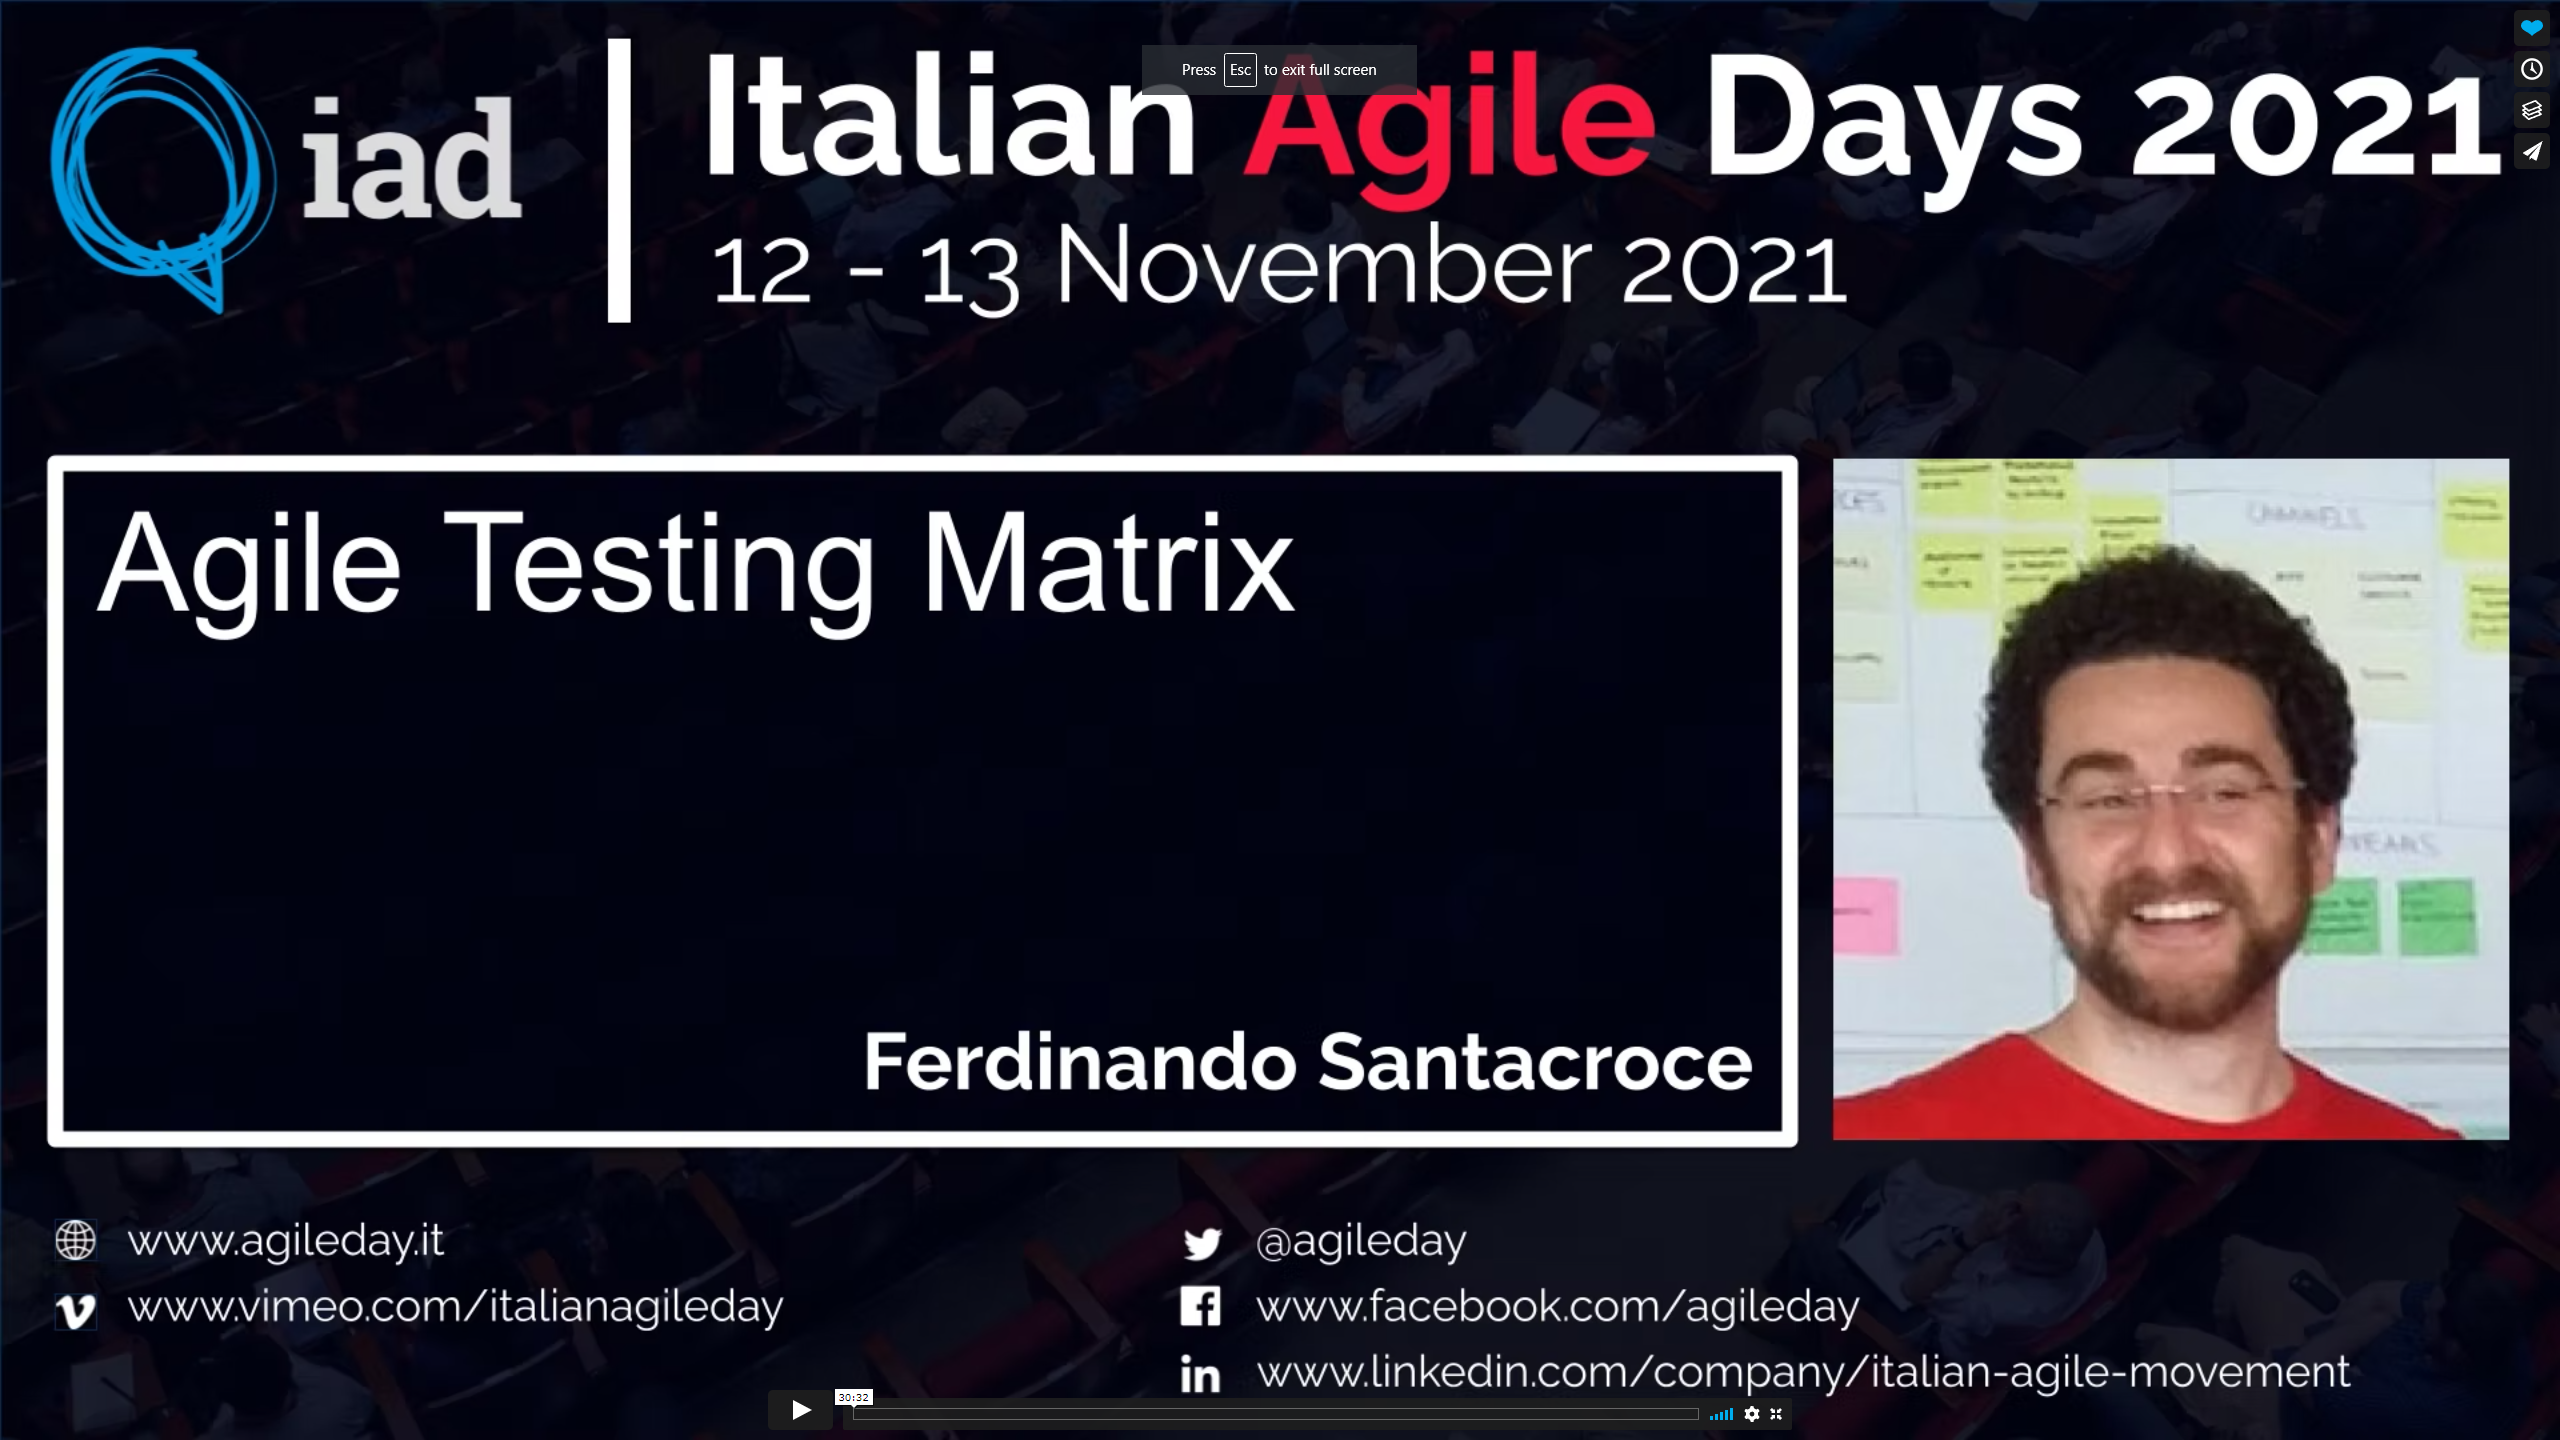 Italian Agile Days 2021 - Agile Testing Matrix - Ferdinando Santacroce